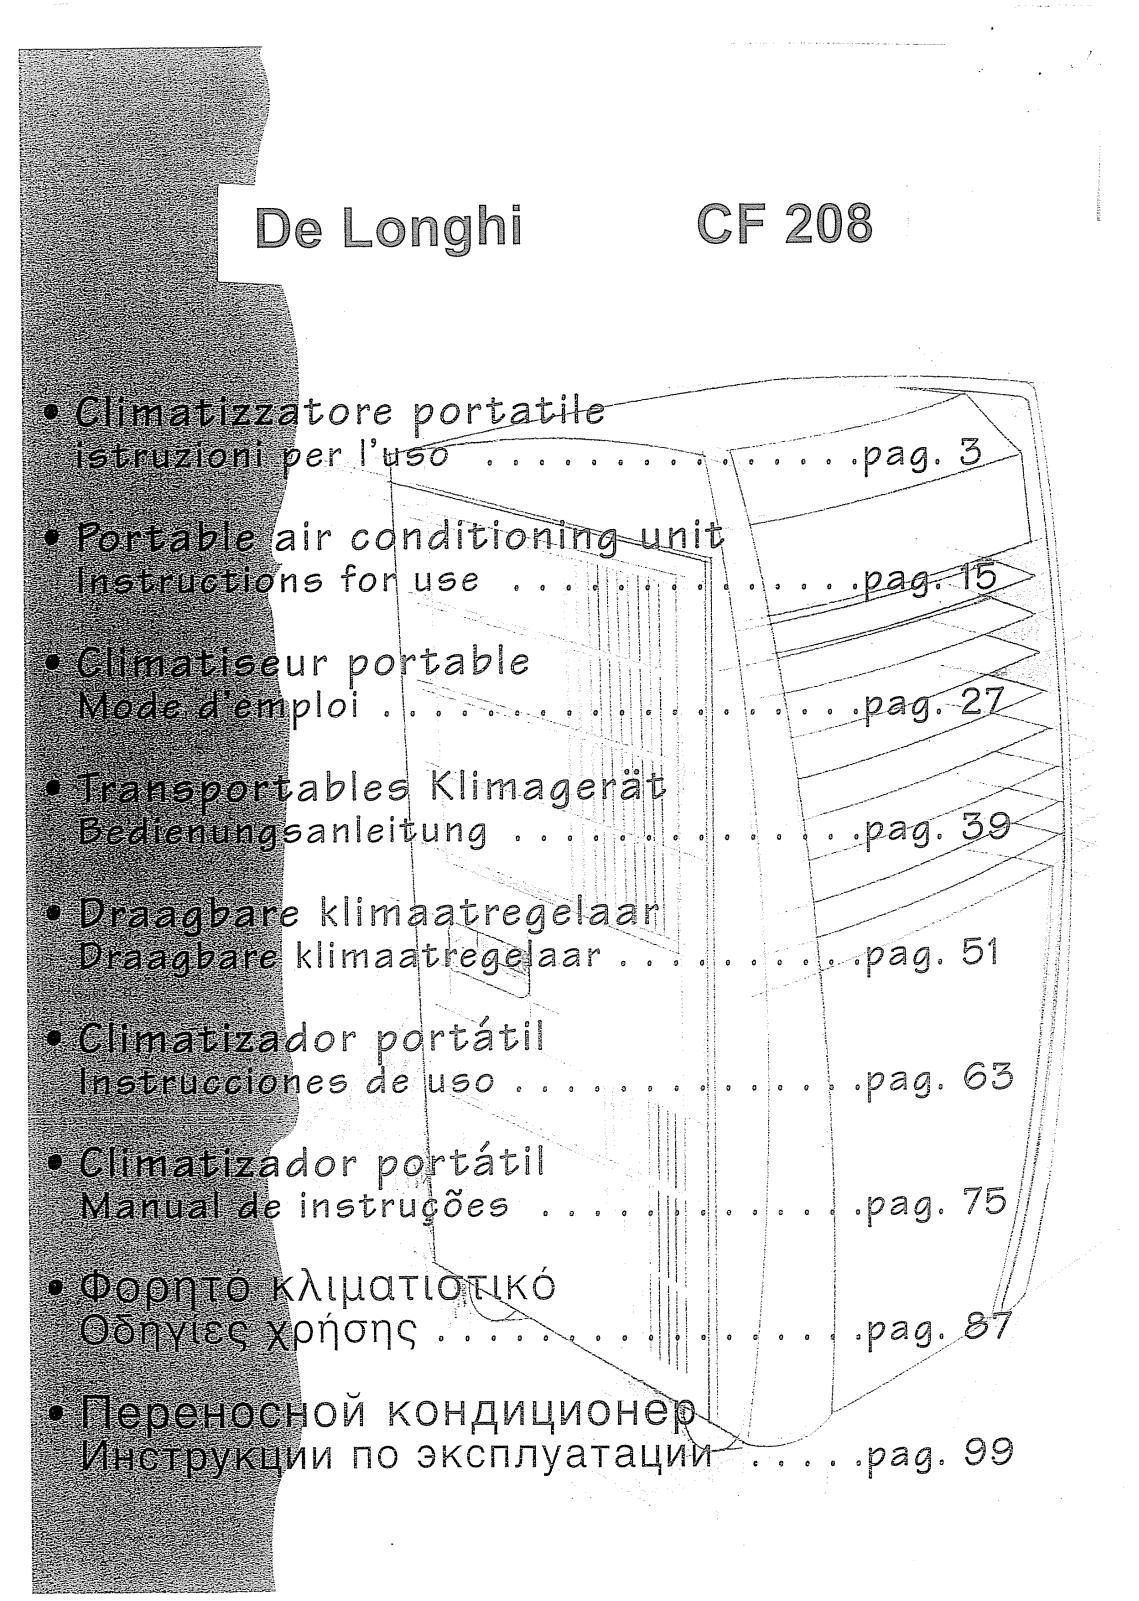 DeLonghi CF208 User Manual